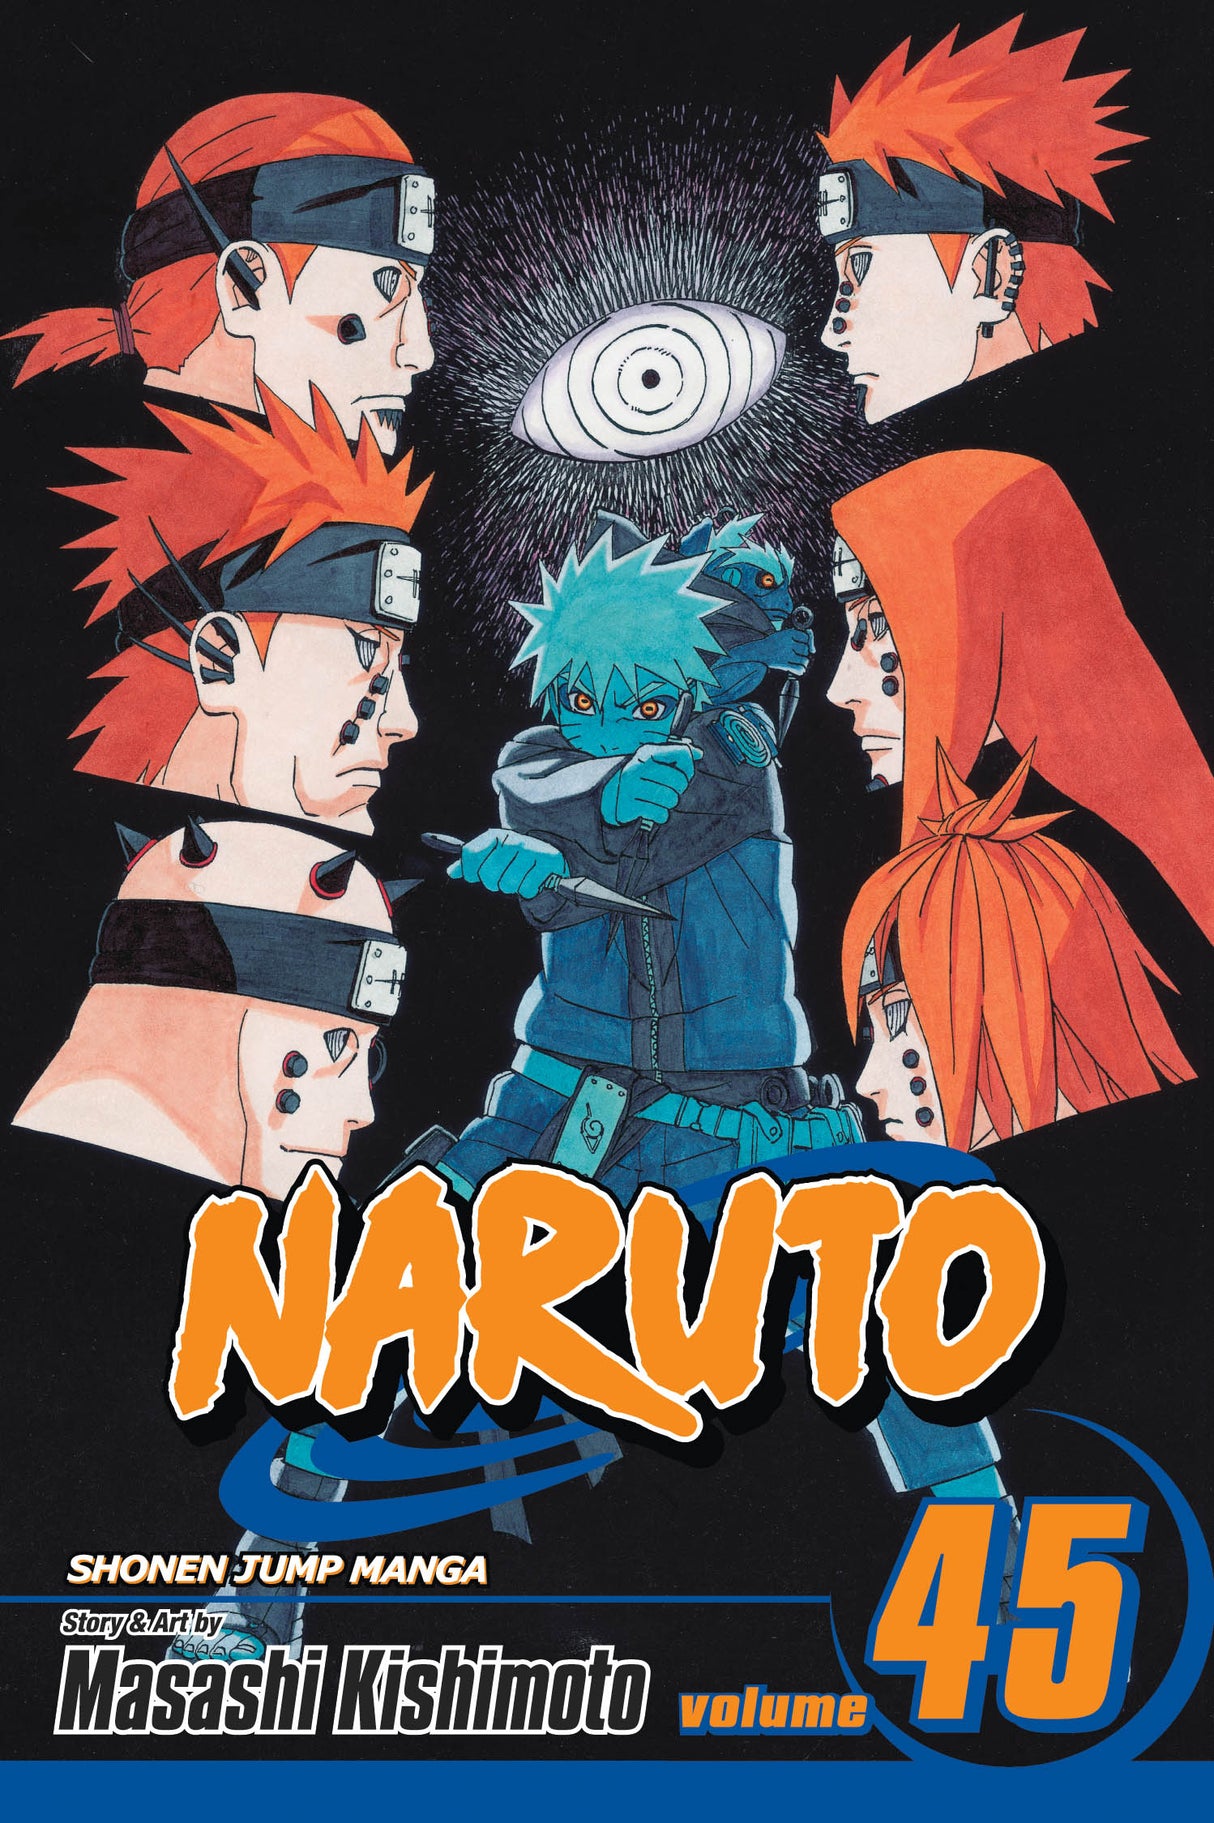 Cover image of the Manga Naruto, Vol.44: Senjutsu Heir